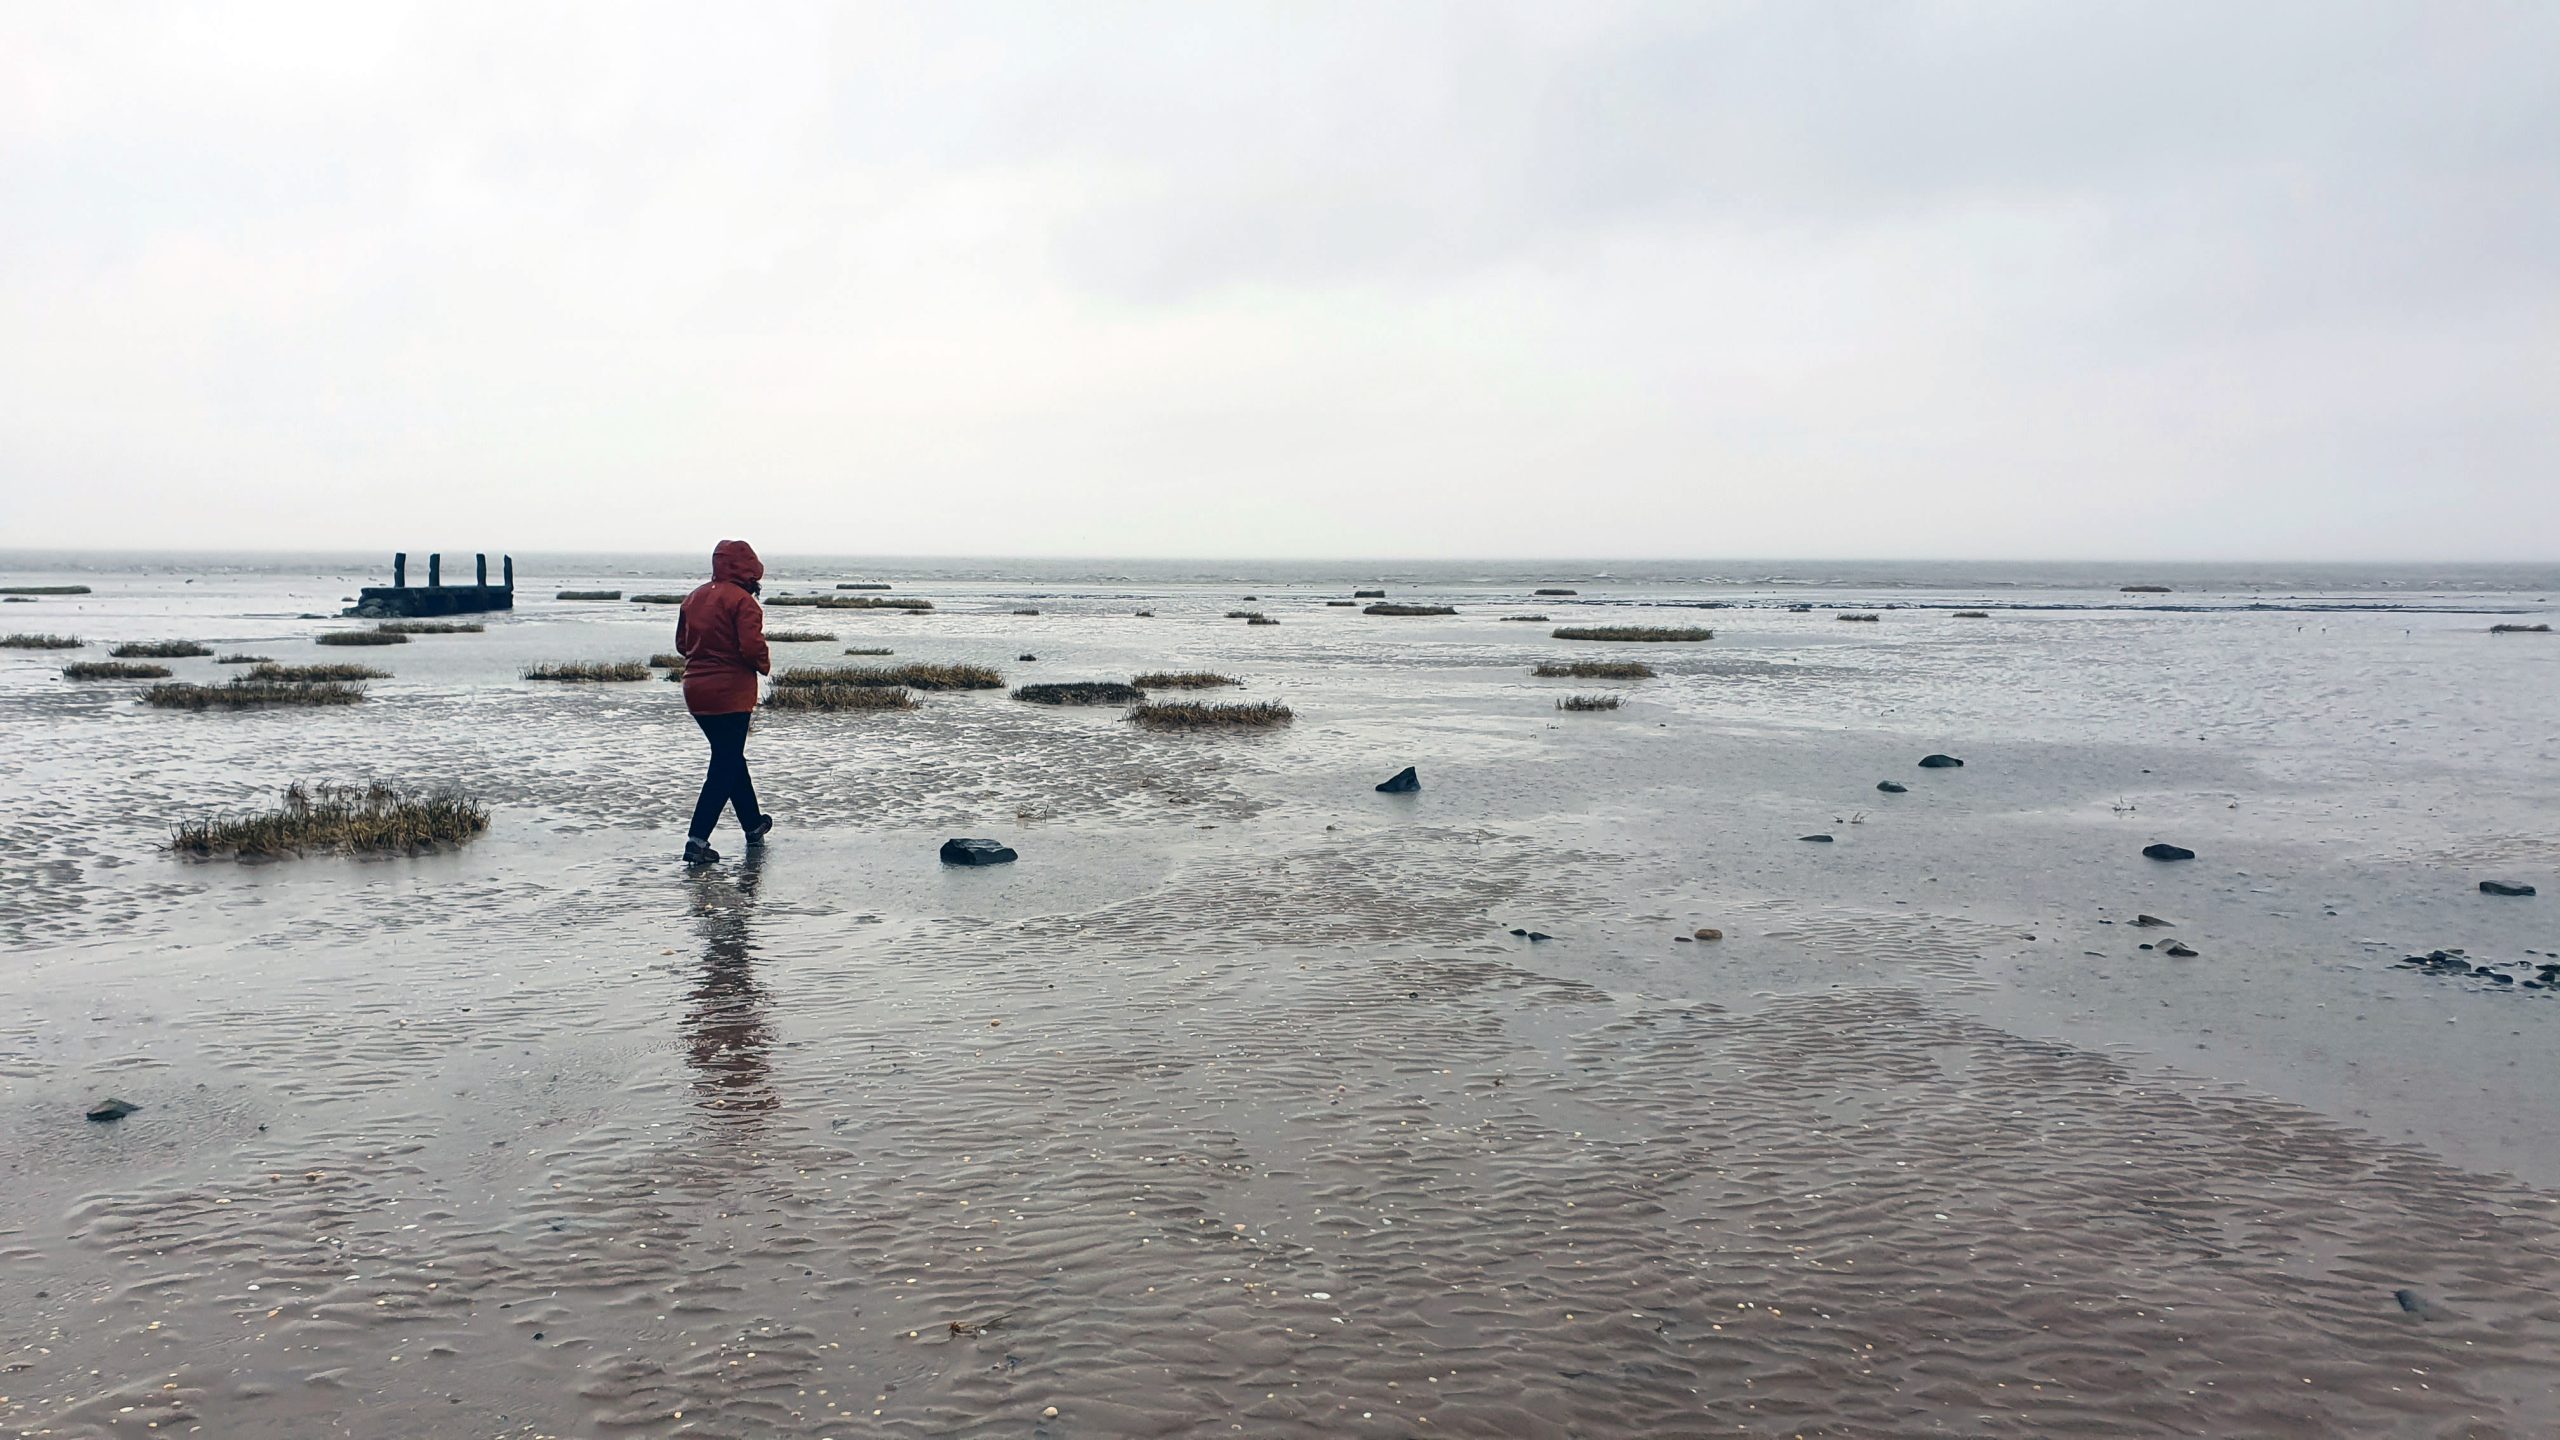 saltmarsh tusoocks in intertidal area. A person in a rusty red rainjacket walking on the mud.